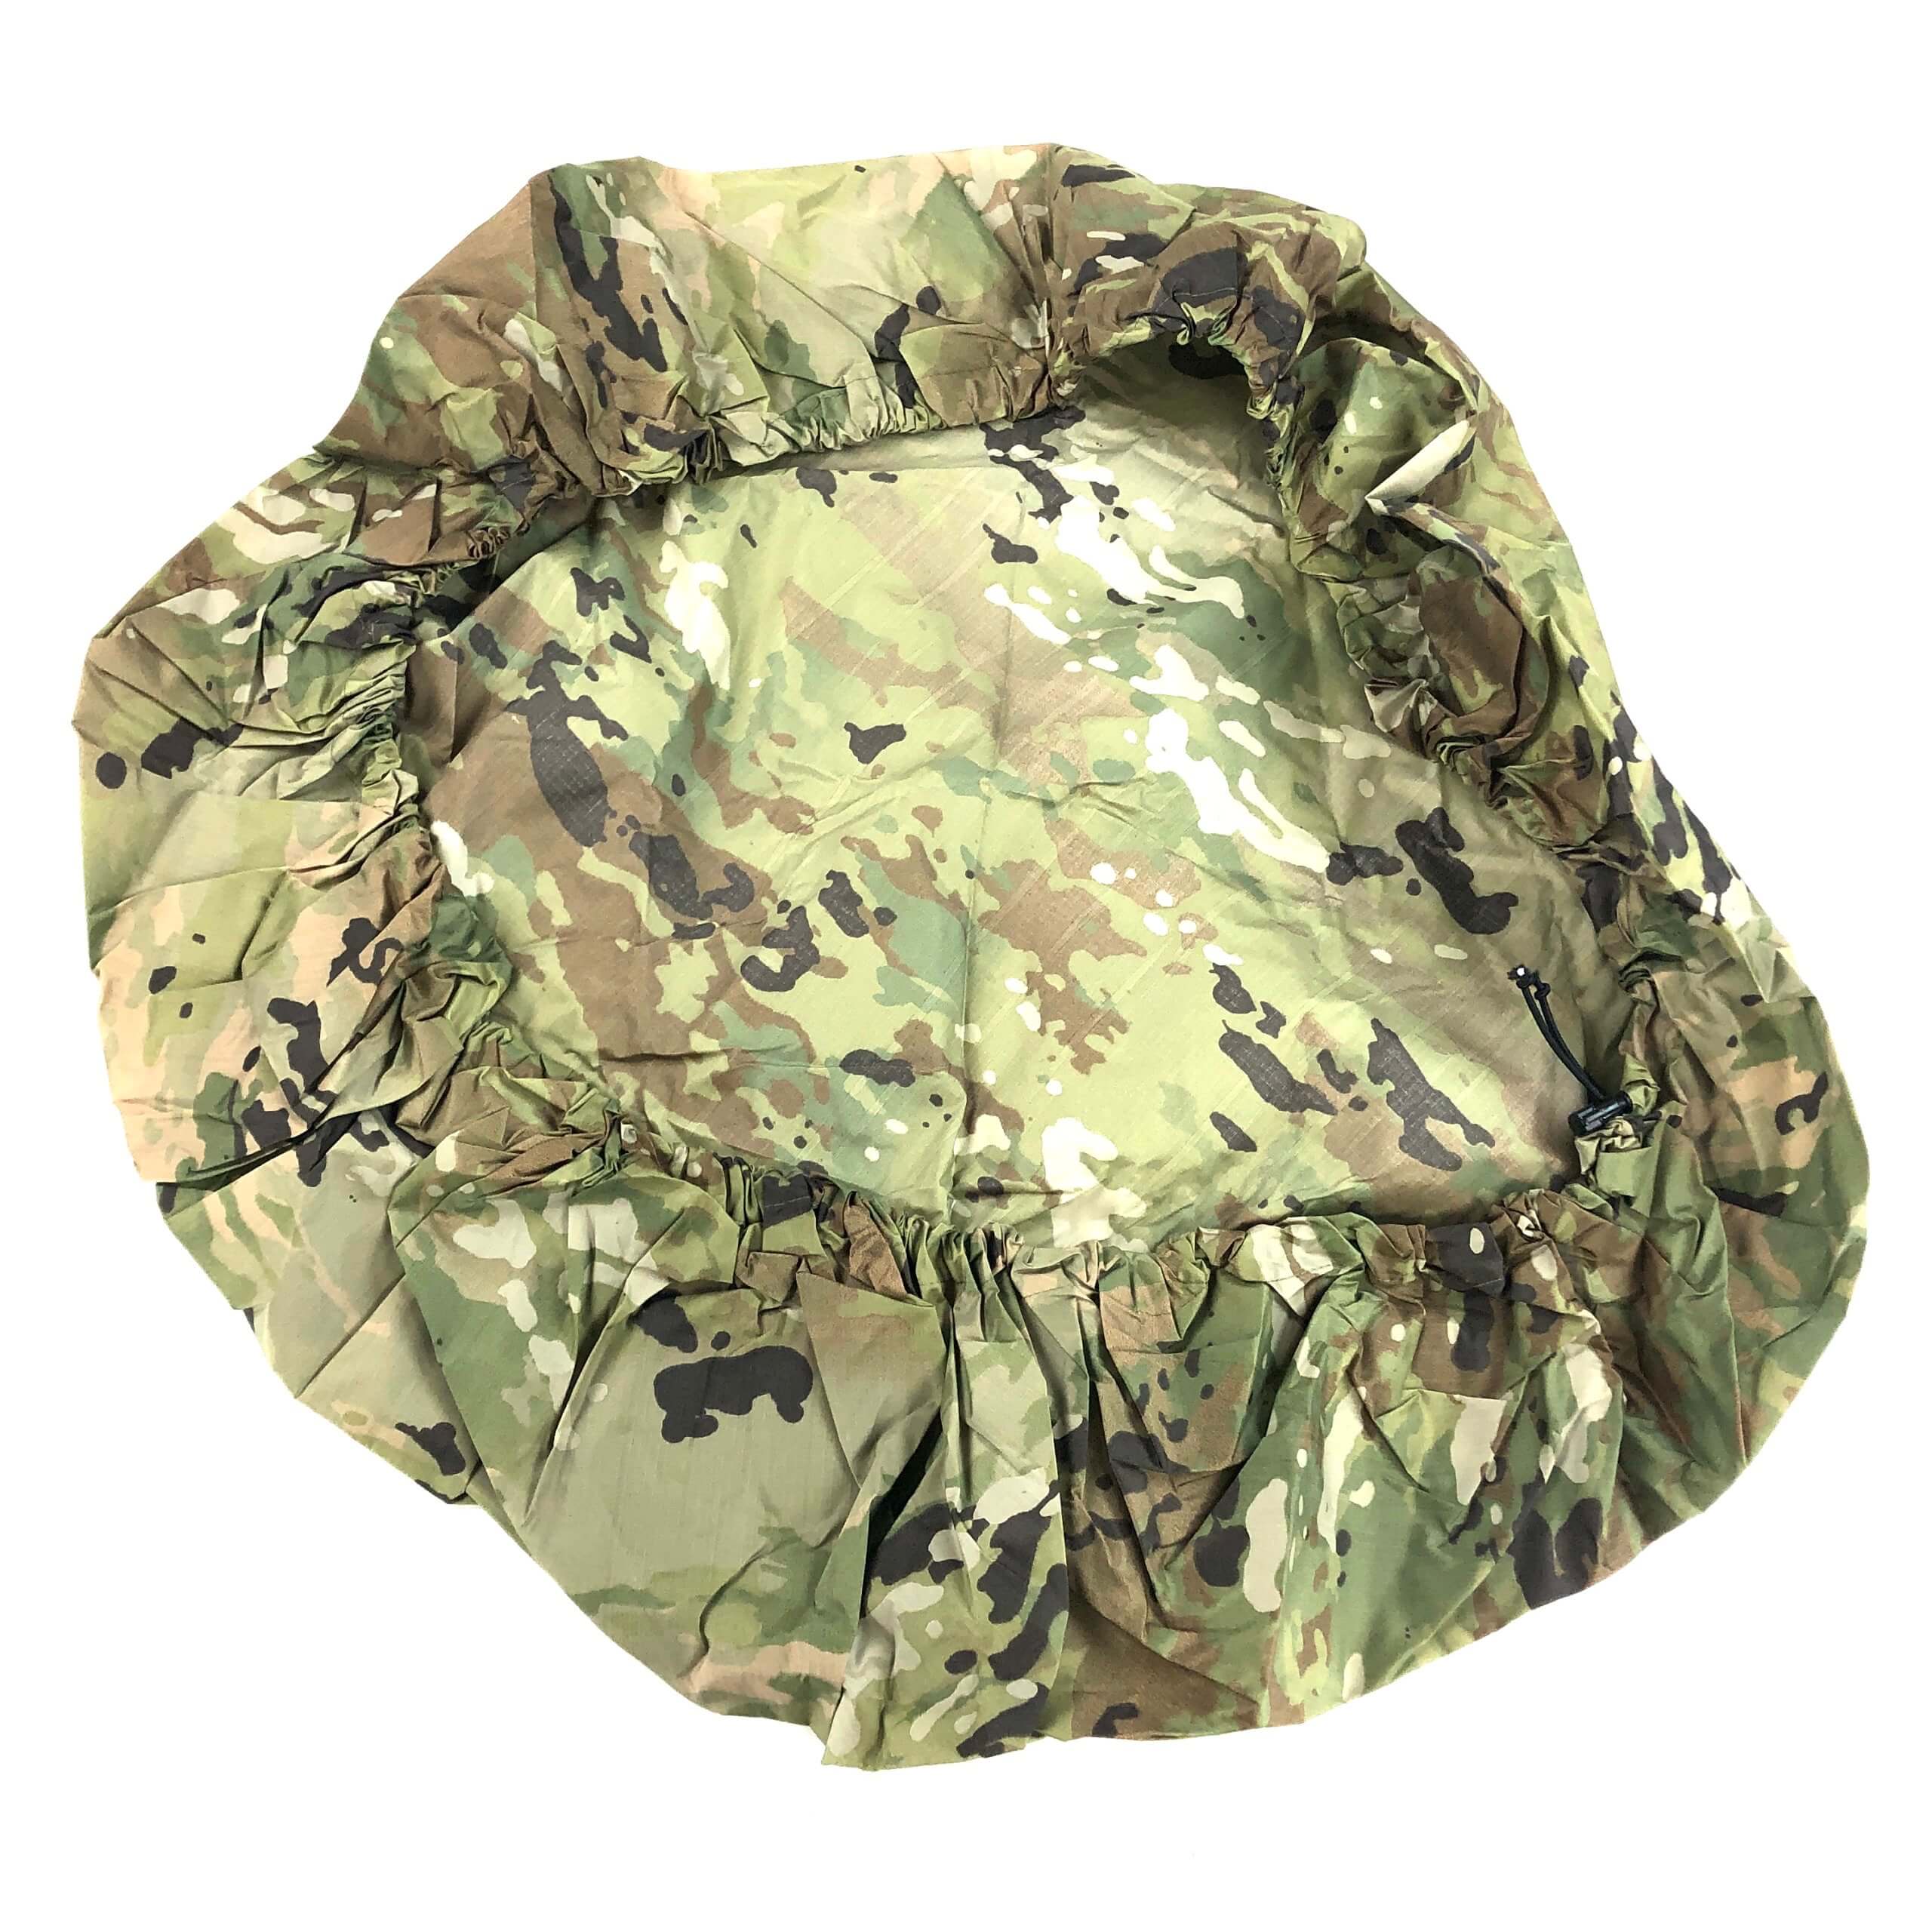 New Rucksack Army Camo Waterproof Bag Military Rain Cover Backpack Desert Combat 